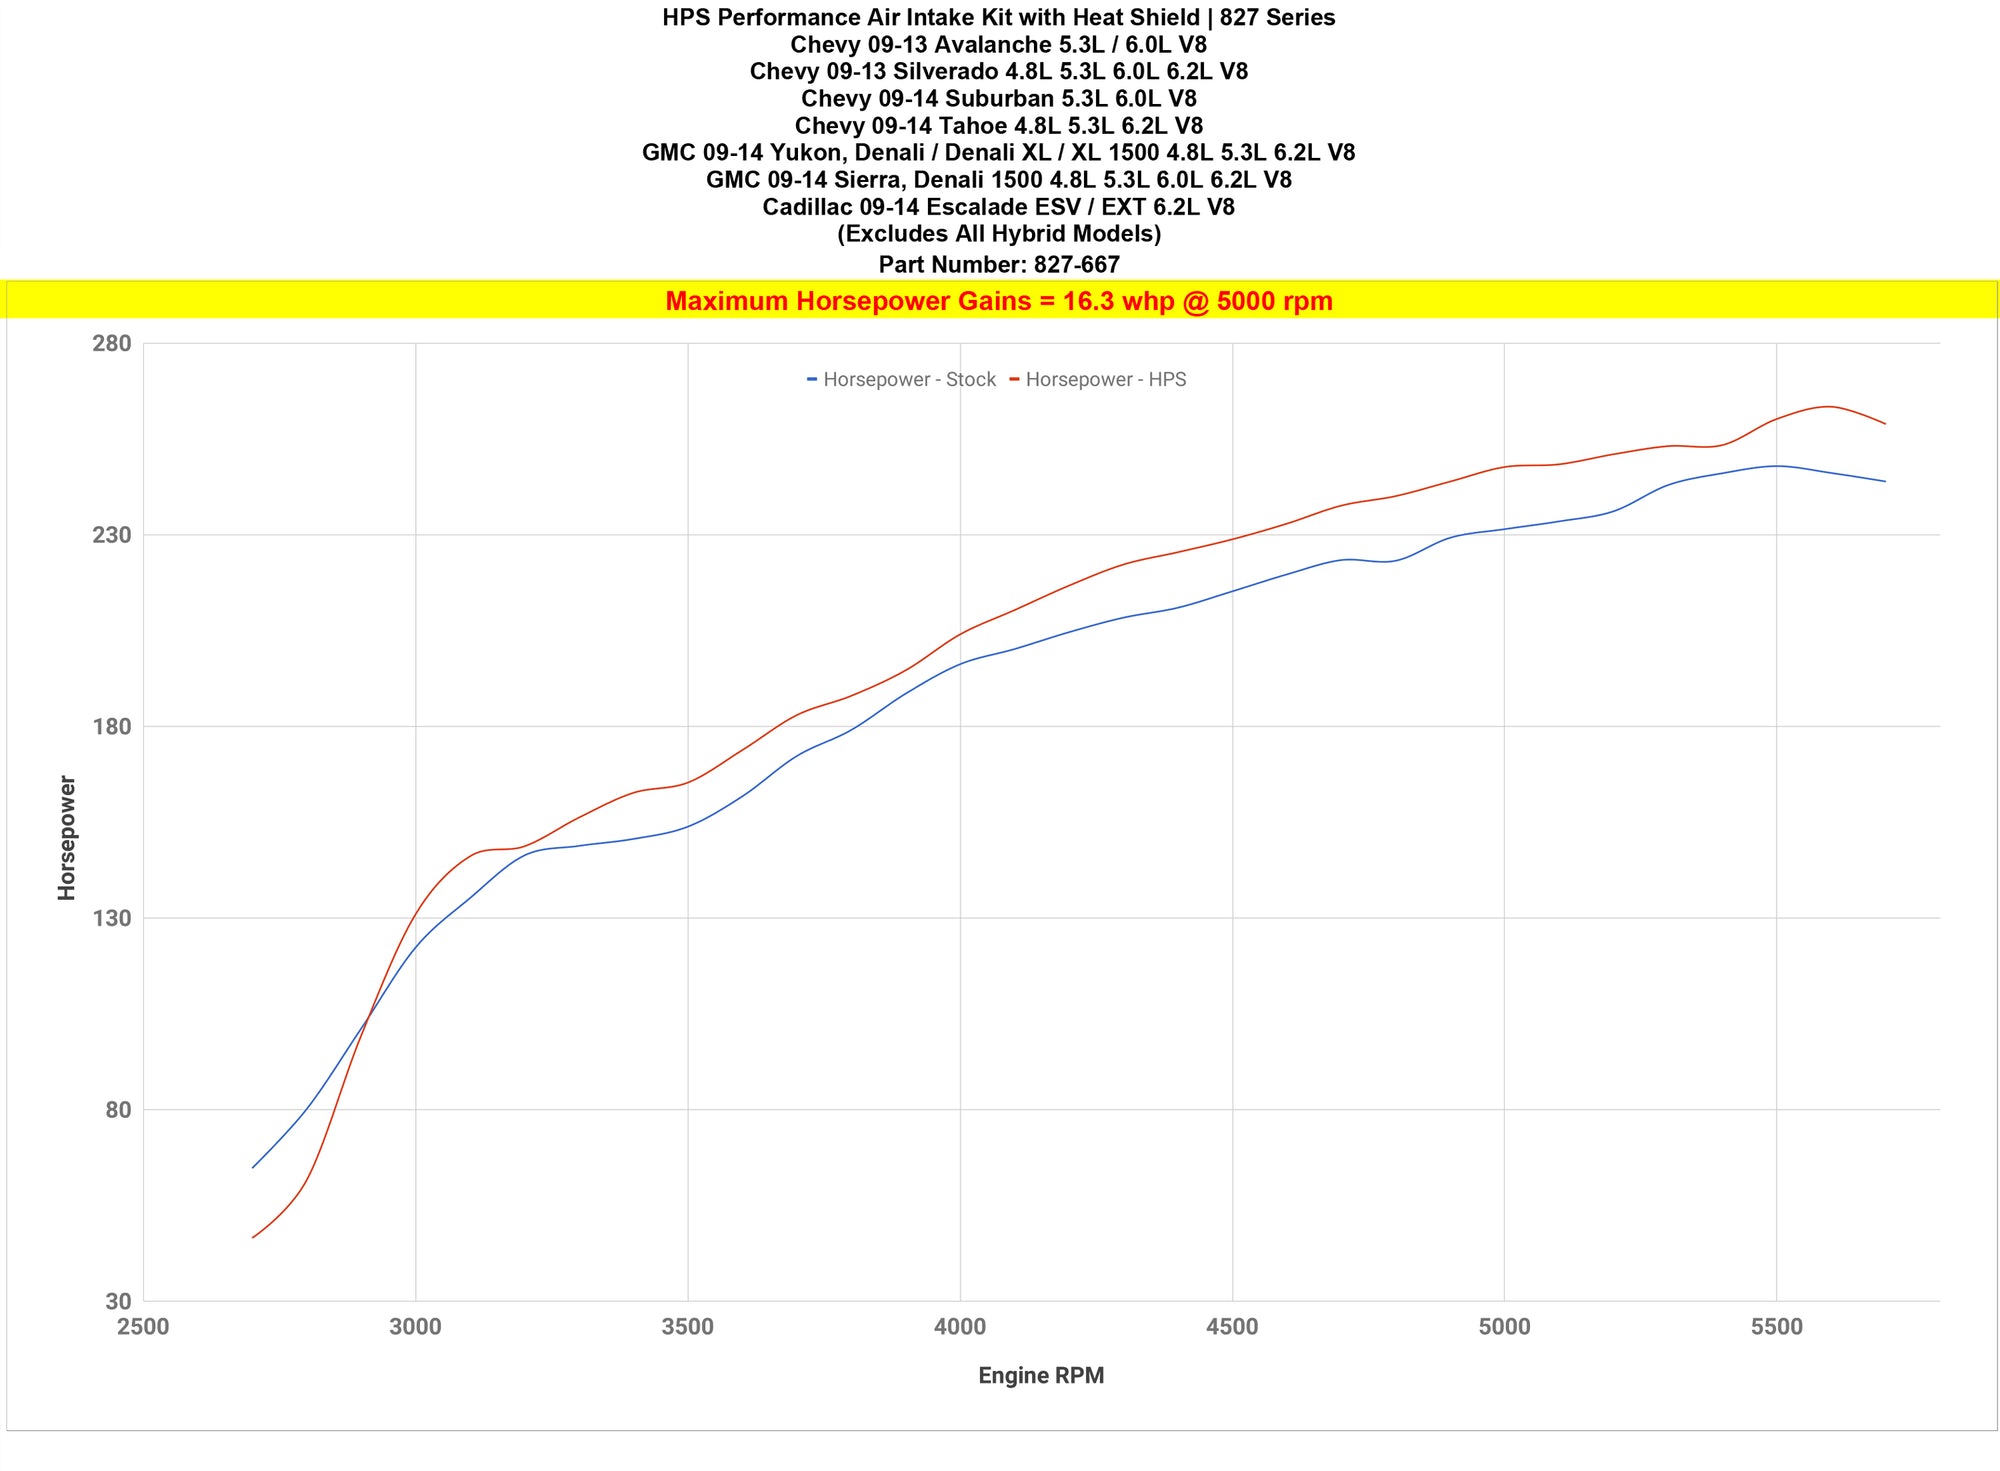 Dyno proven gains 16.3 whp HPS Performance Shortram Air Intake Kit 2009-2014 GMC Sierra 1500 4.8L 5.3L 6.0L 6.2L V8 (Excludes Hybrid) 827-667BL